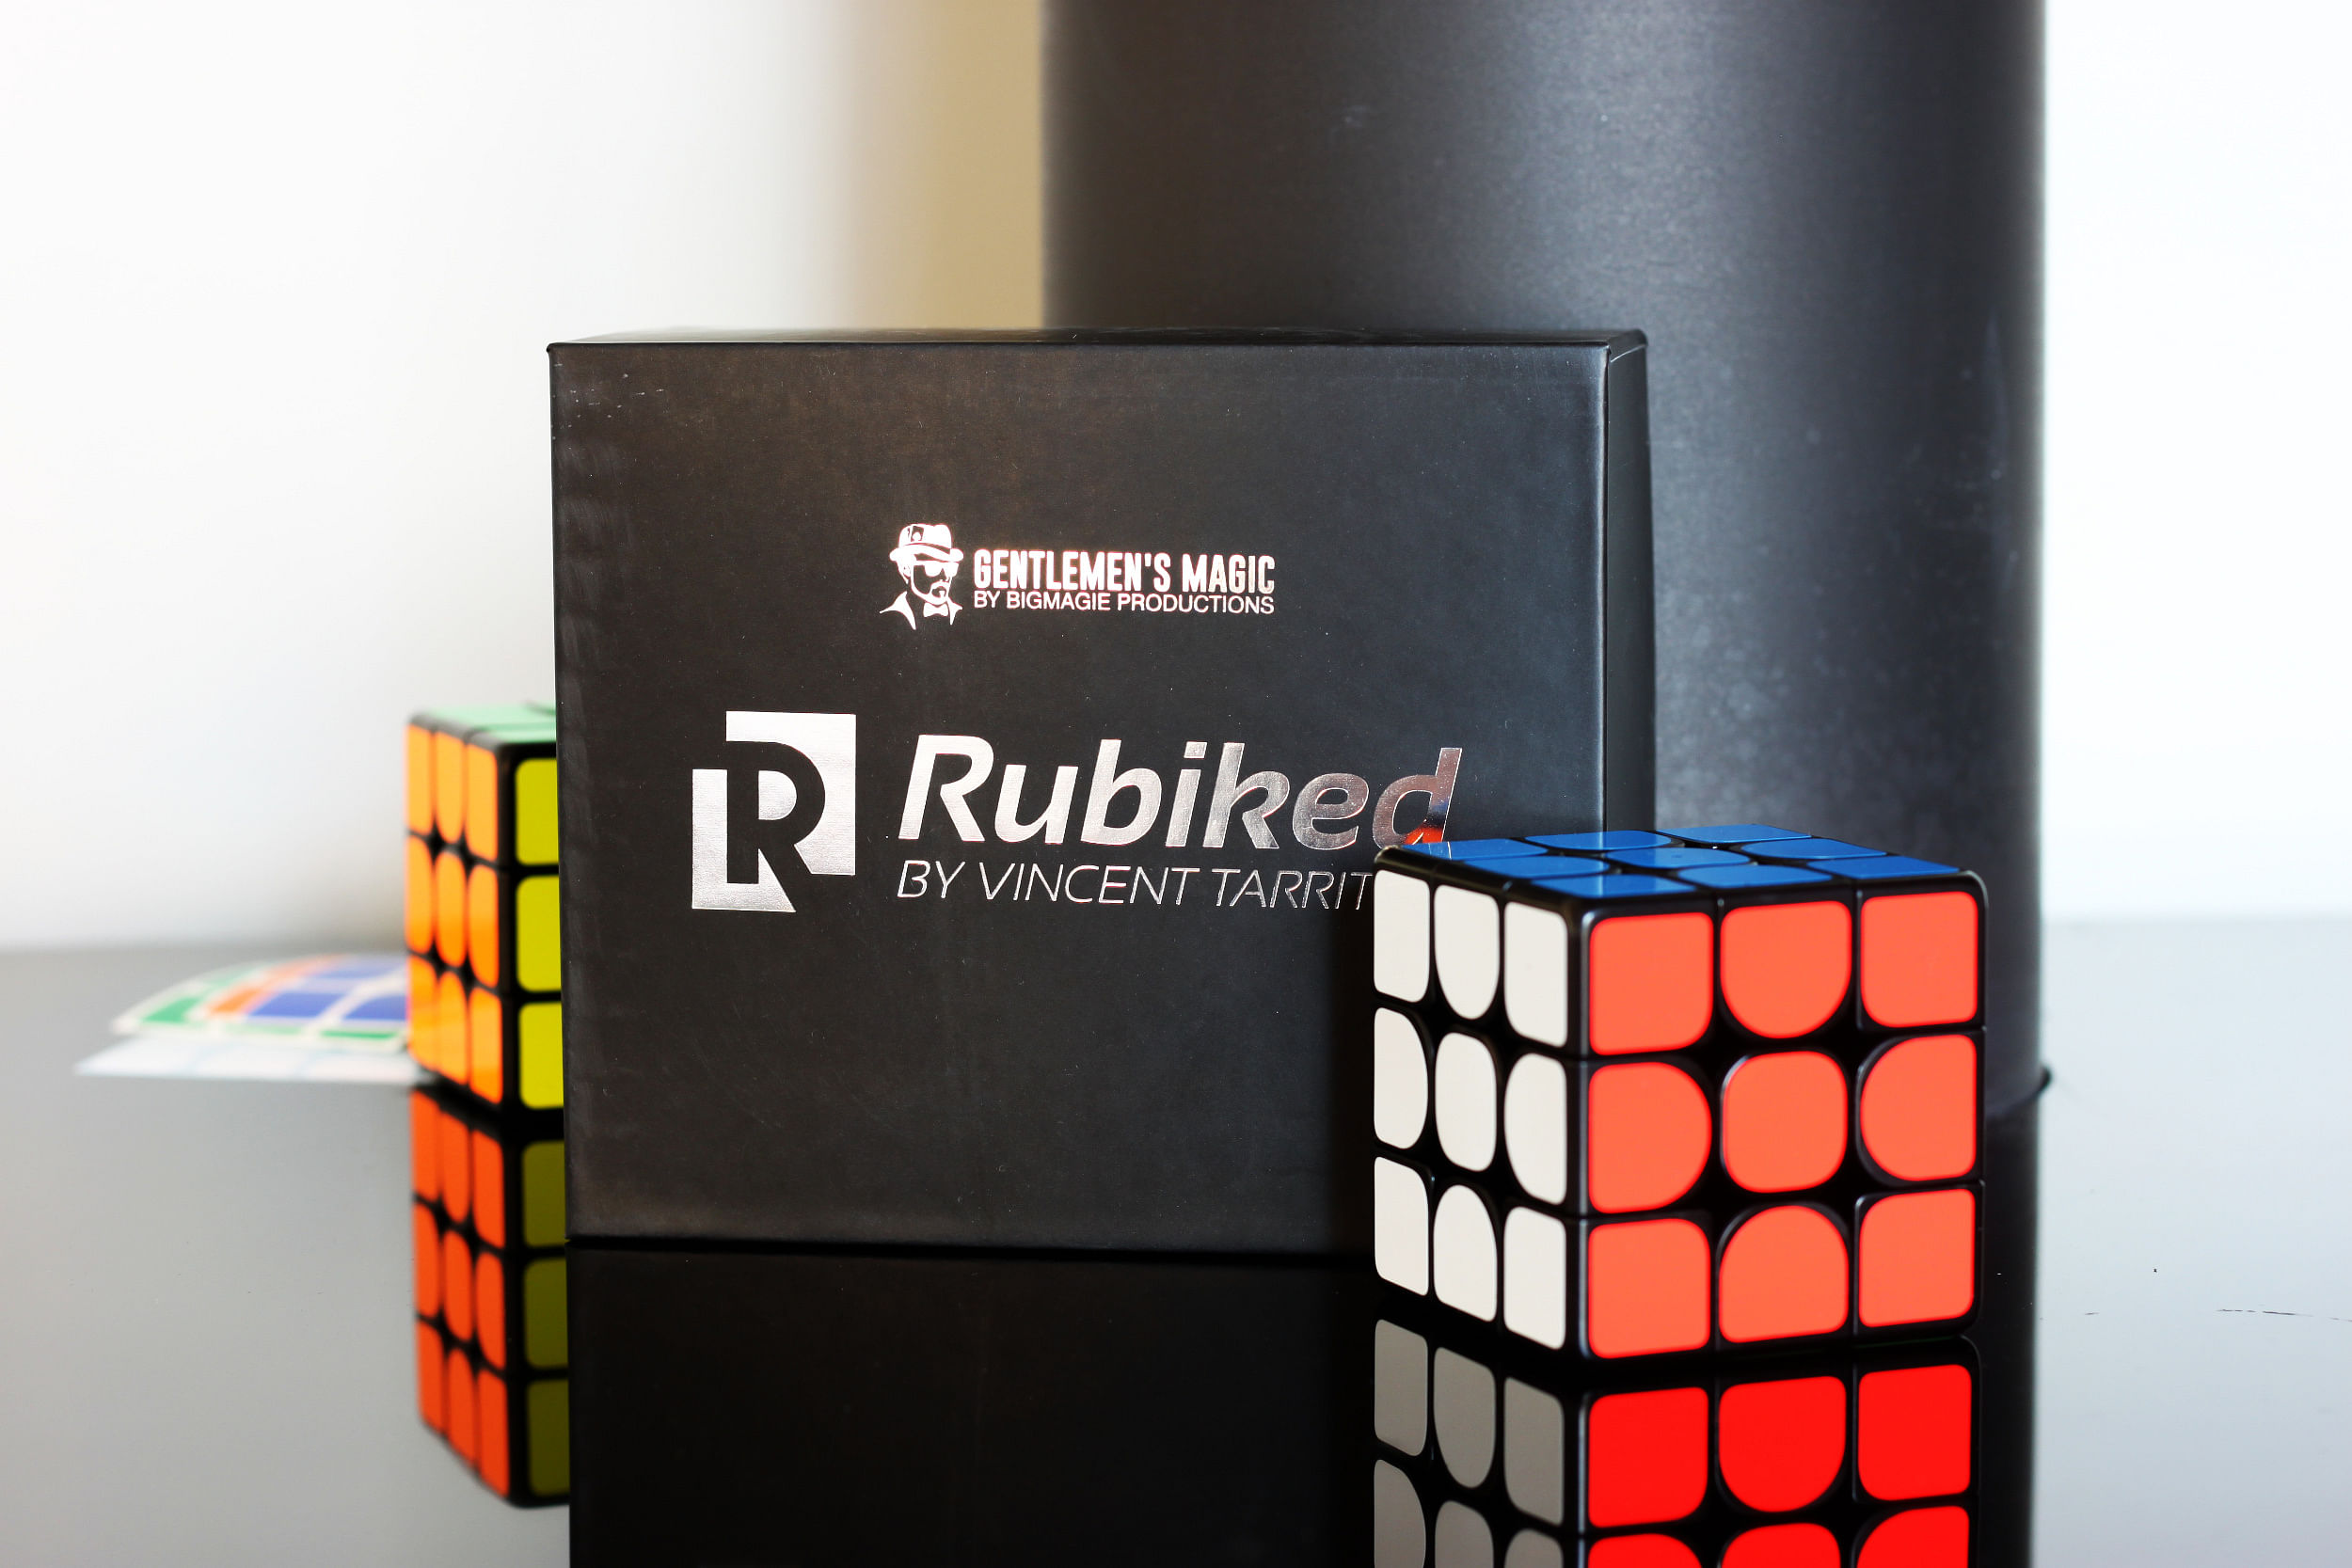 rubiks cube timer shopping